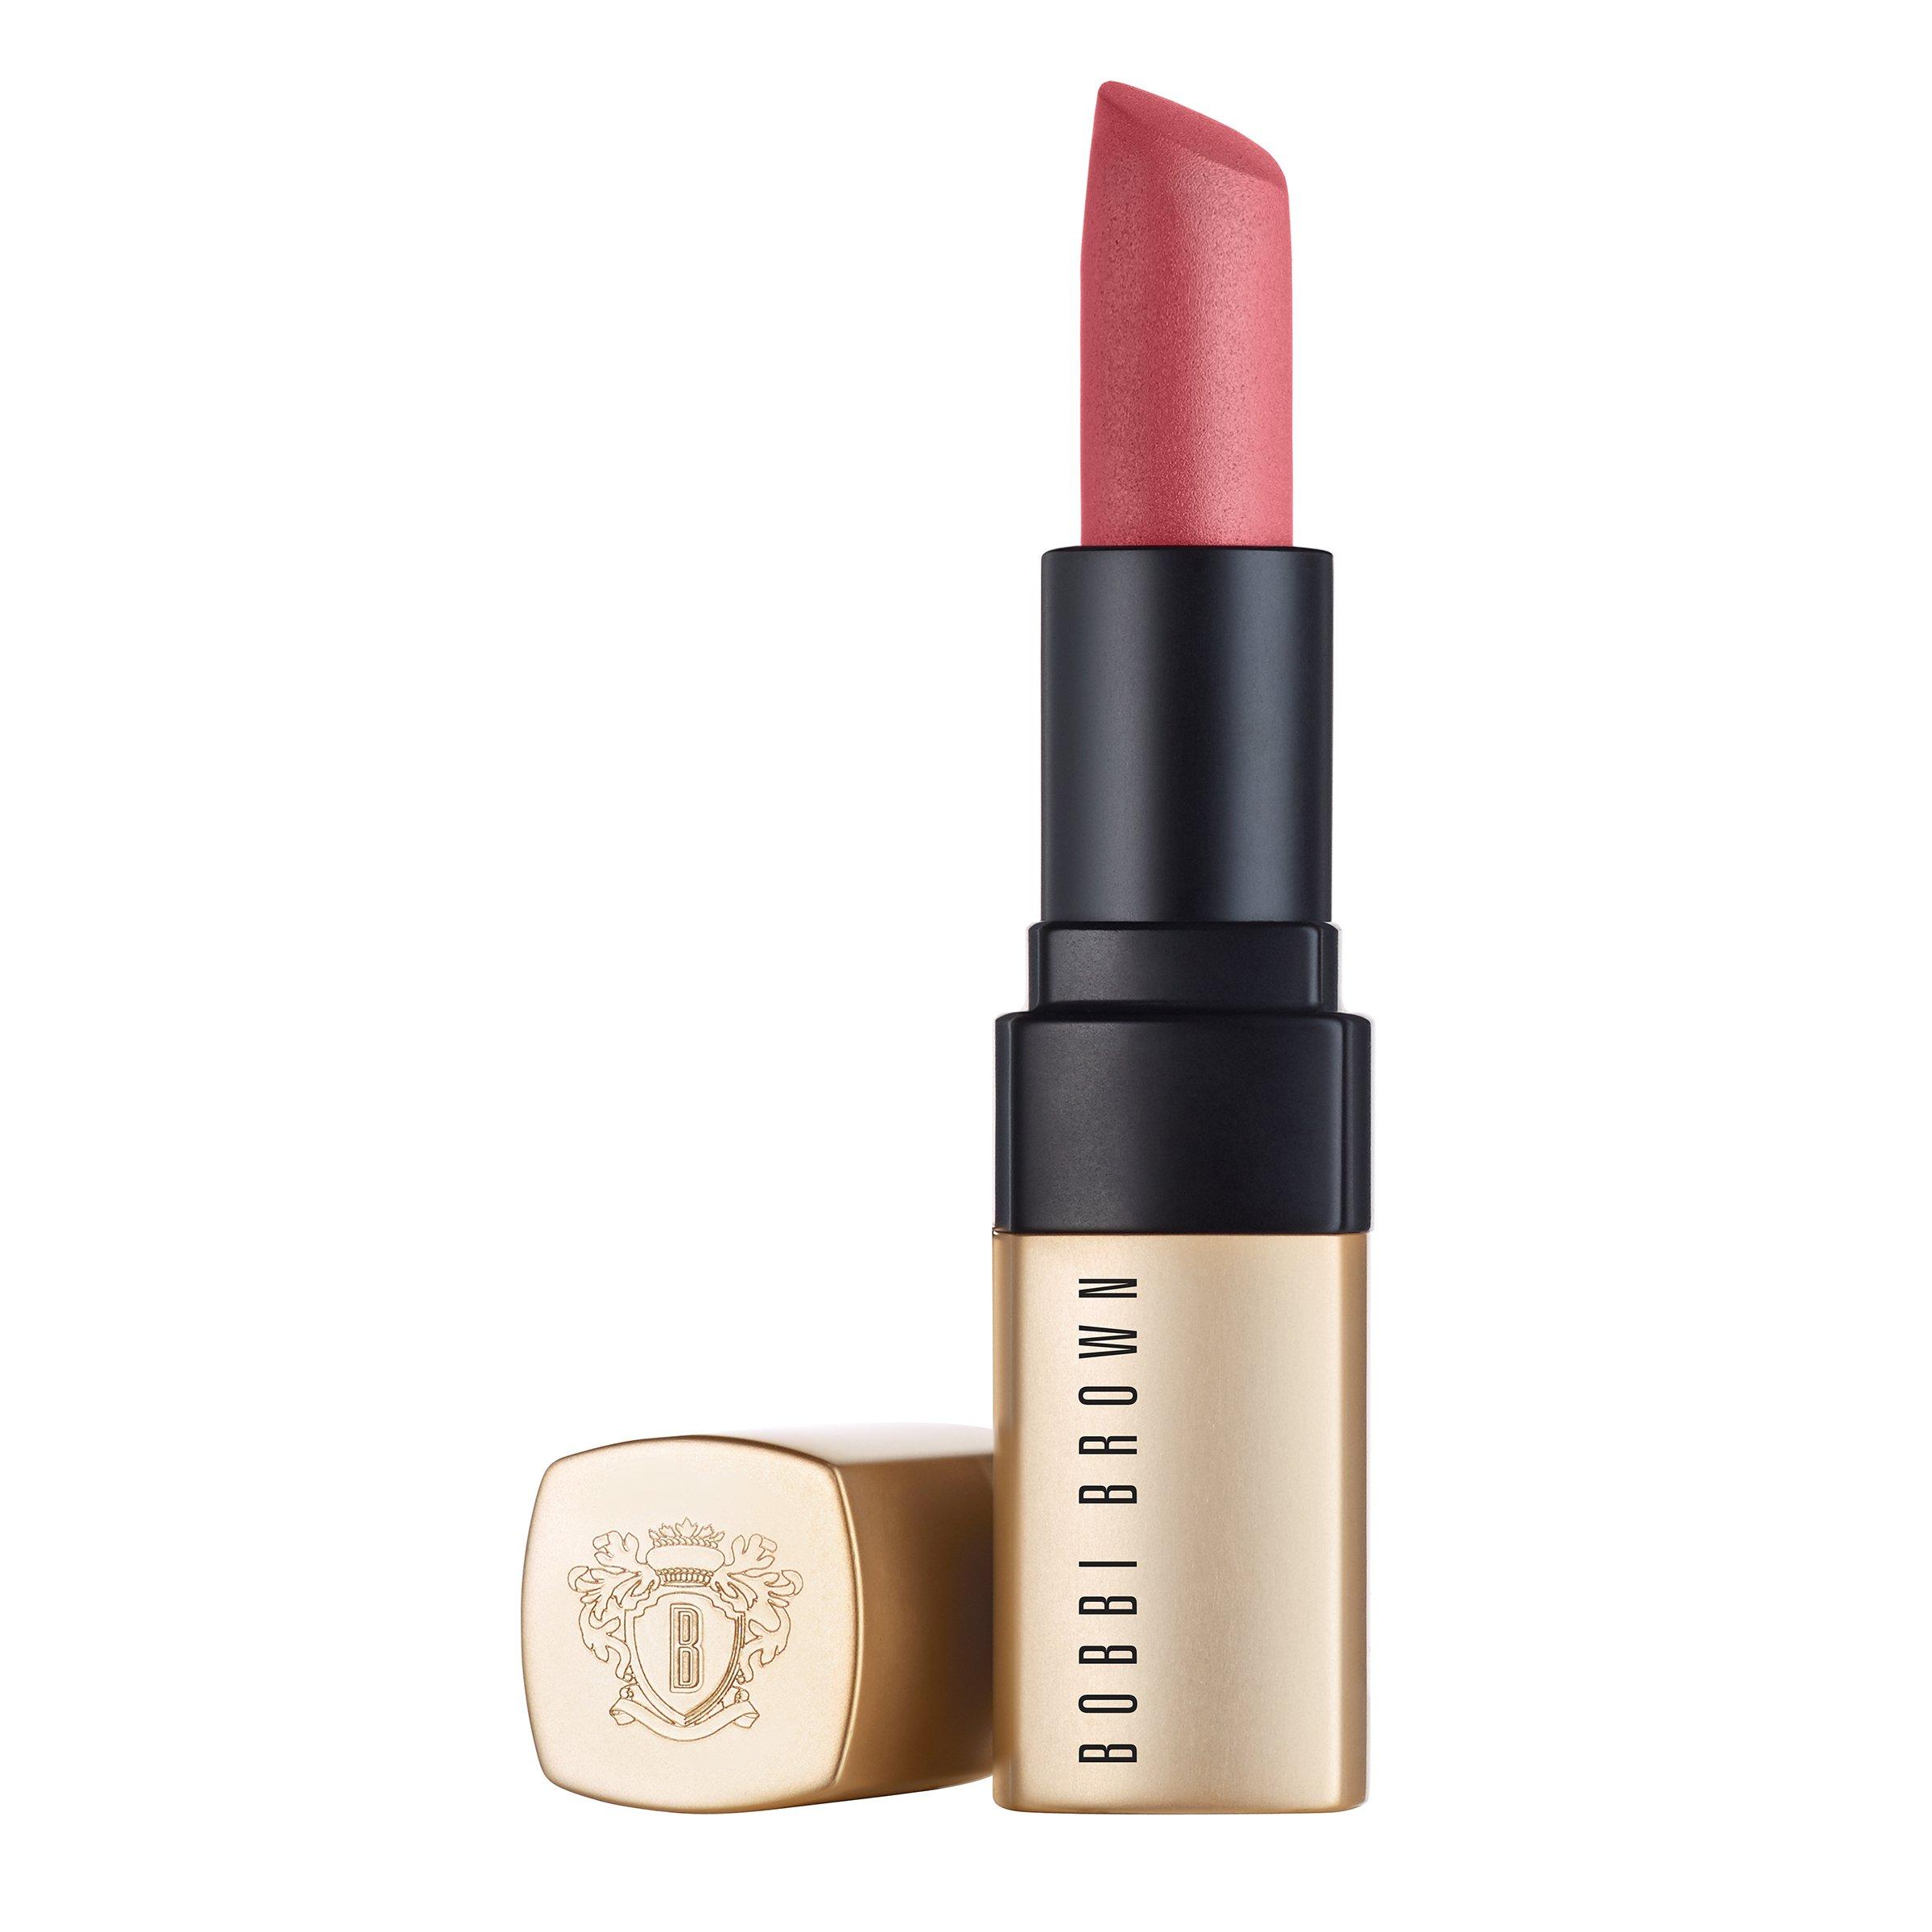 Bobbi Brown - Luxe Matte Lip Color - True Pink